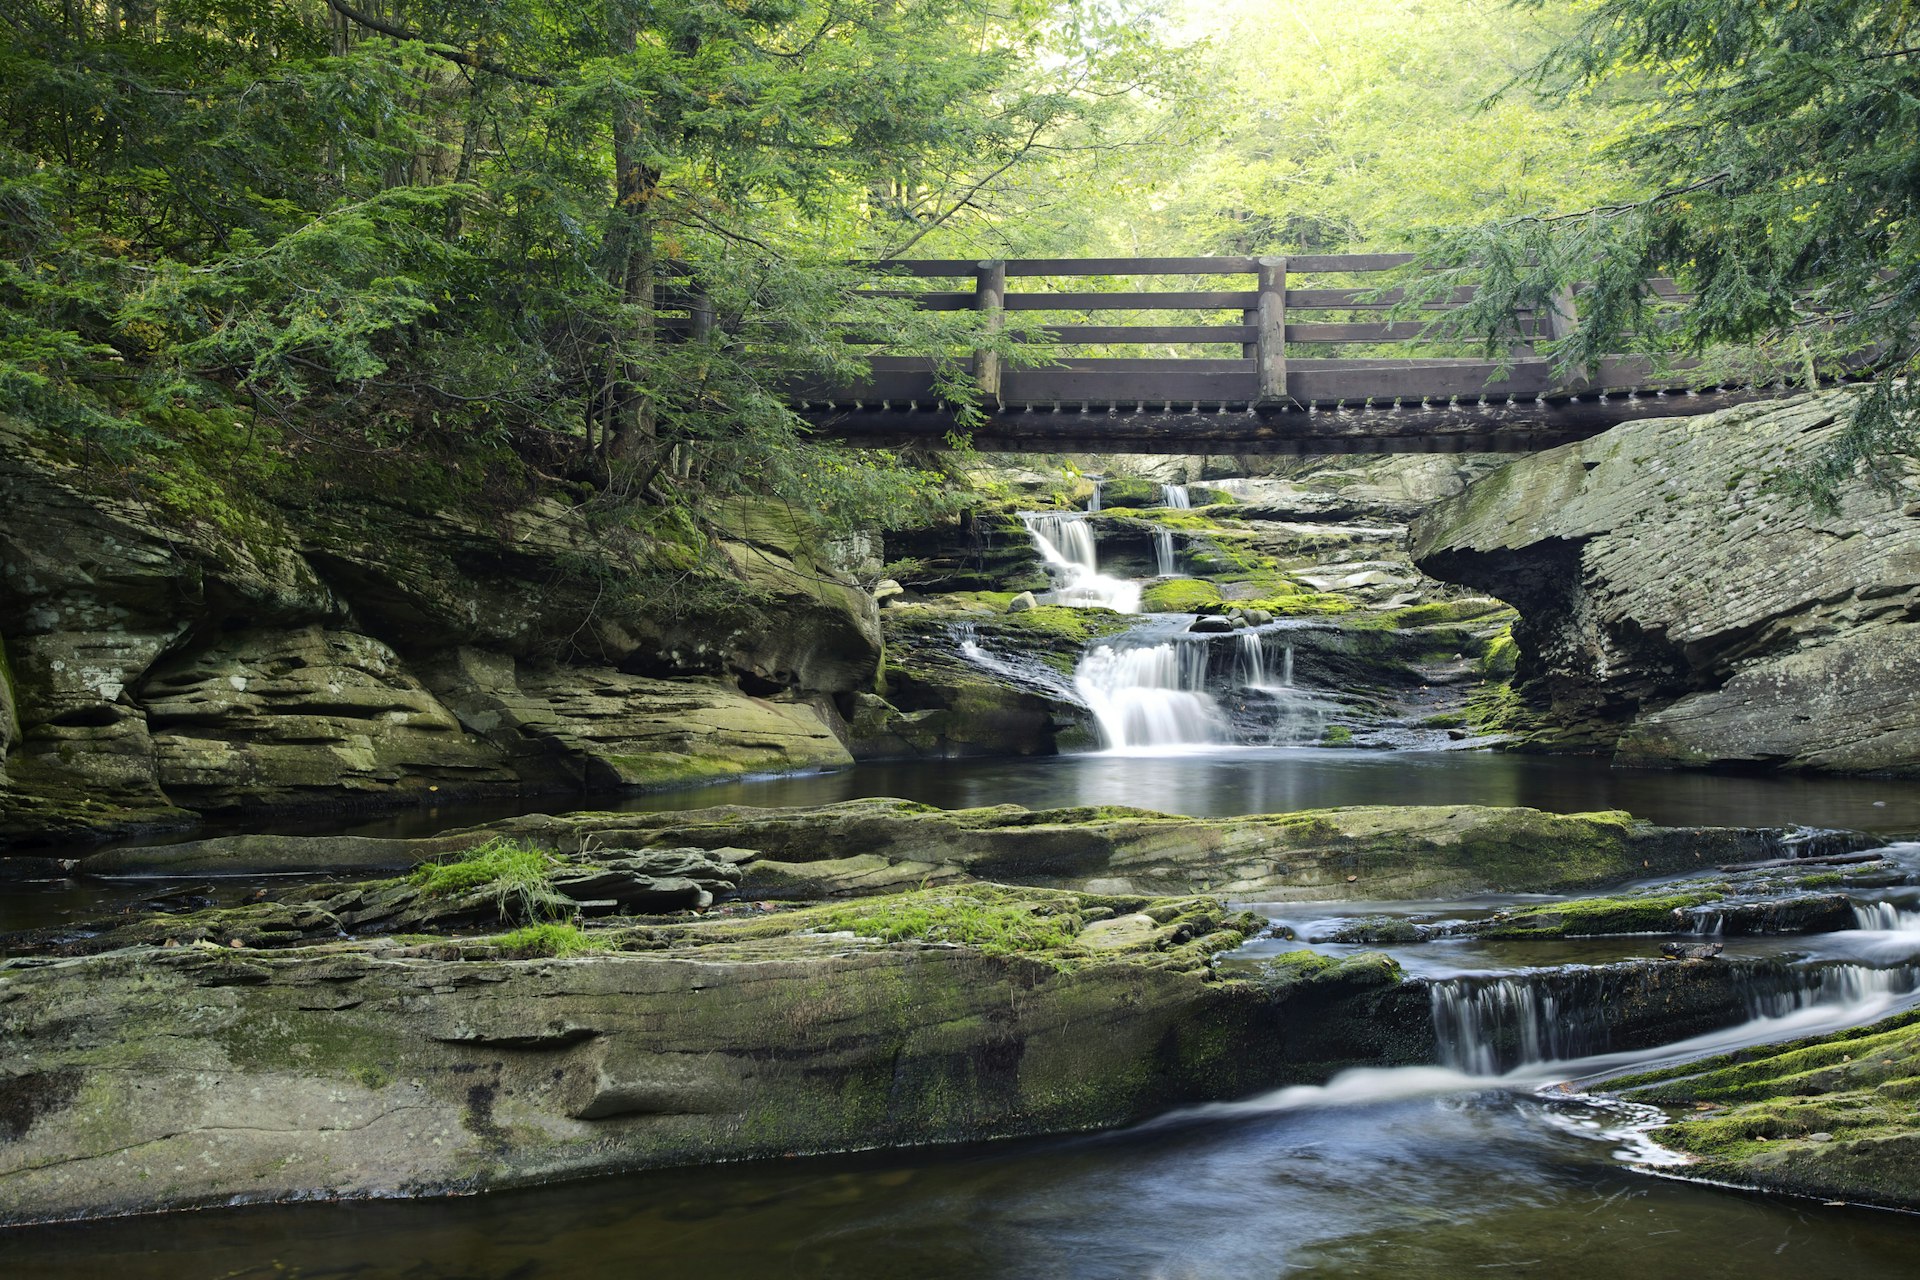 Bridge Over Vernooy Kill Falls Waterfall in Catskill Mountains